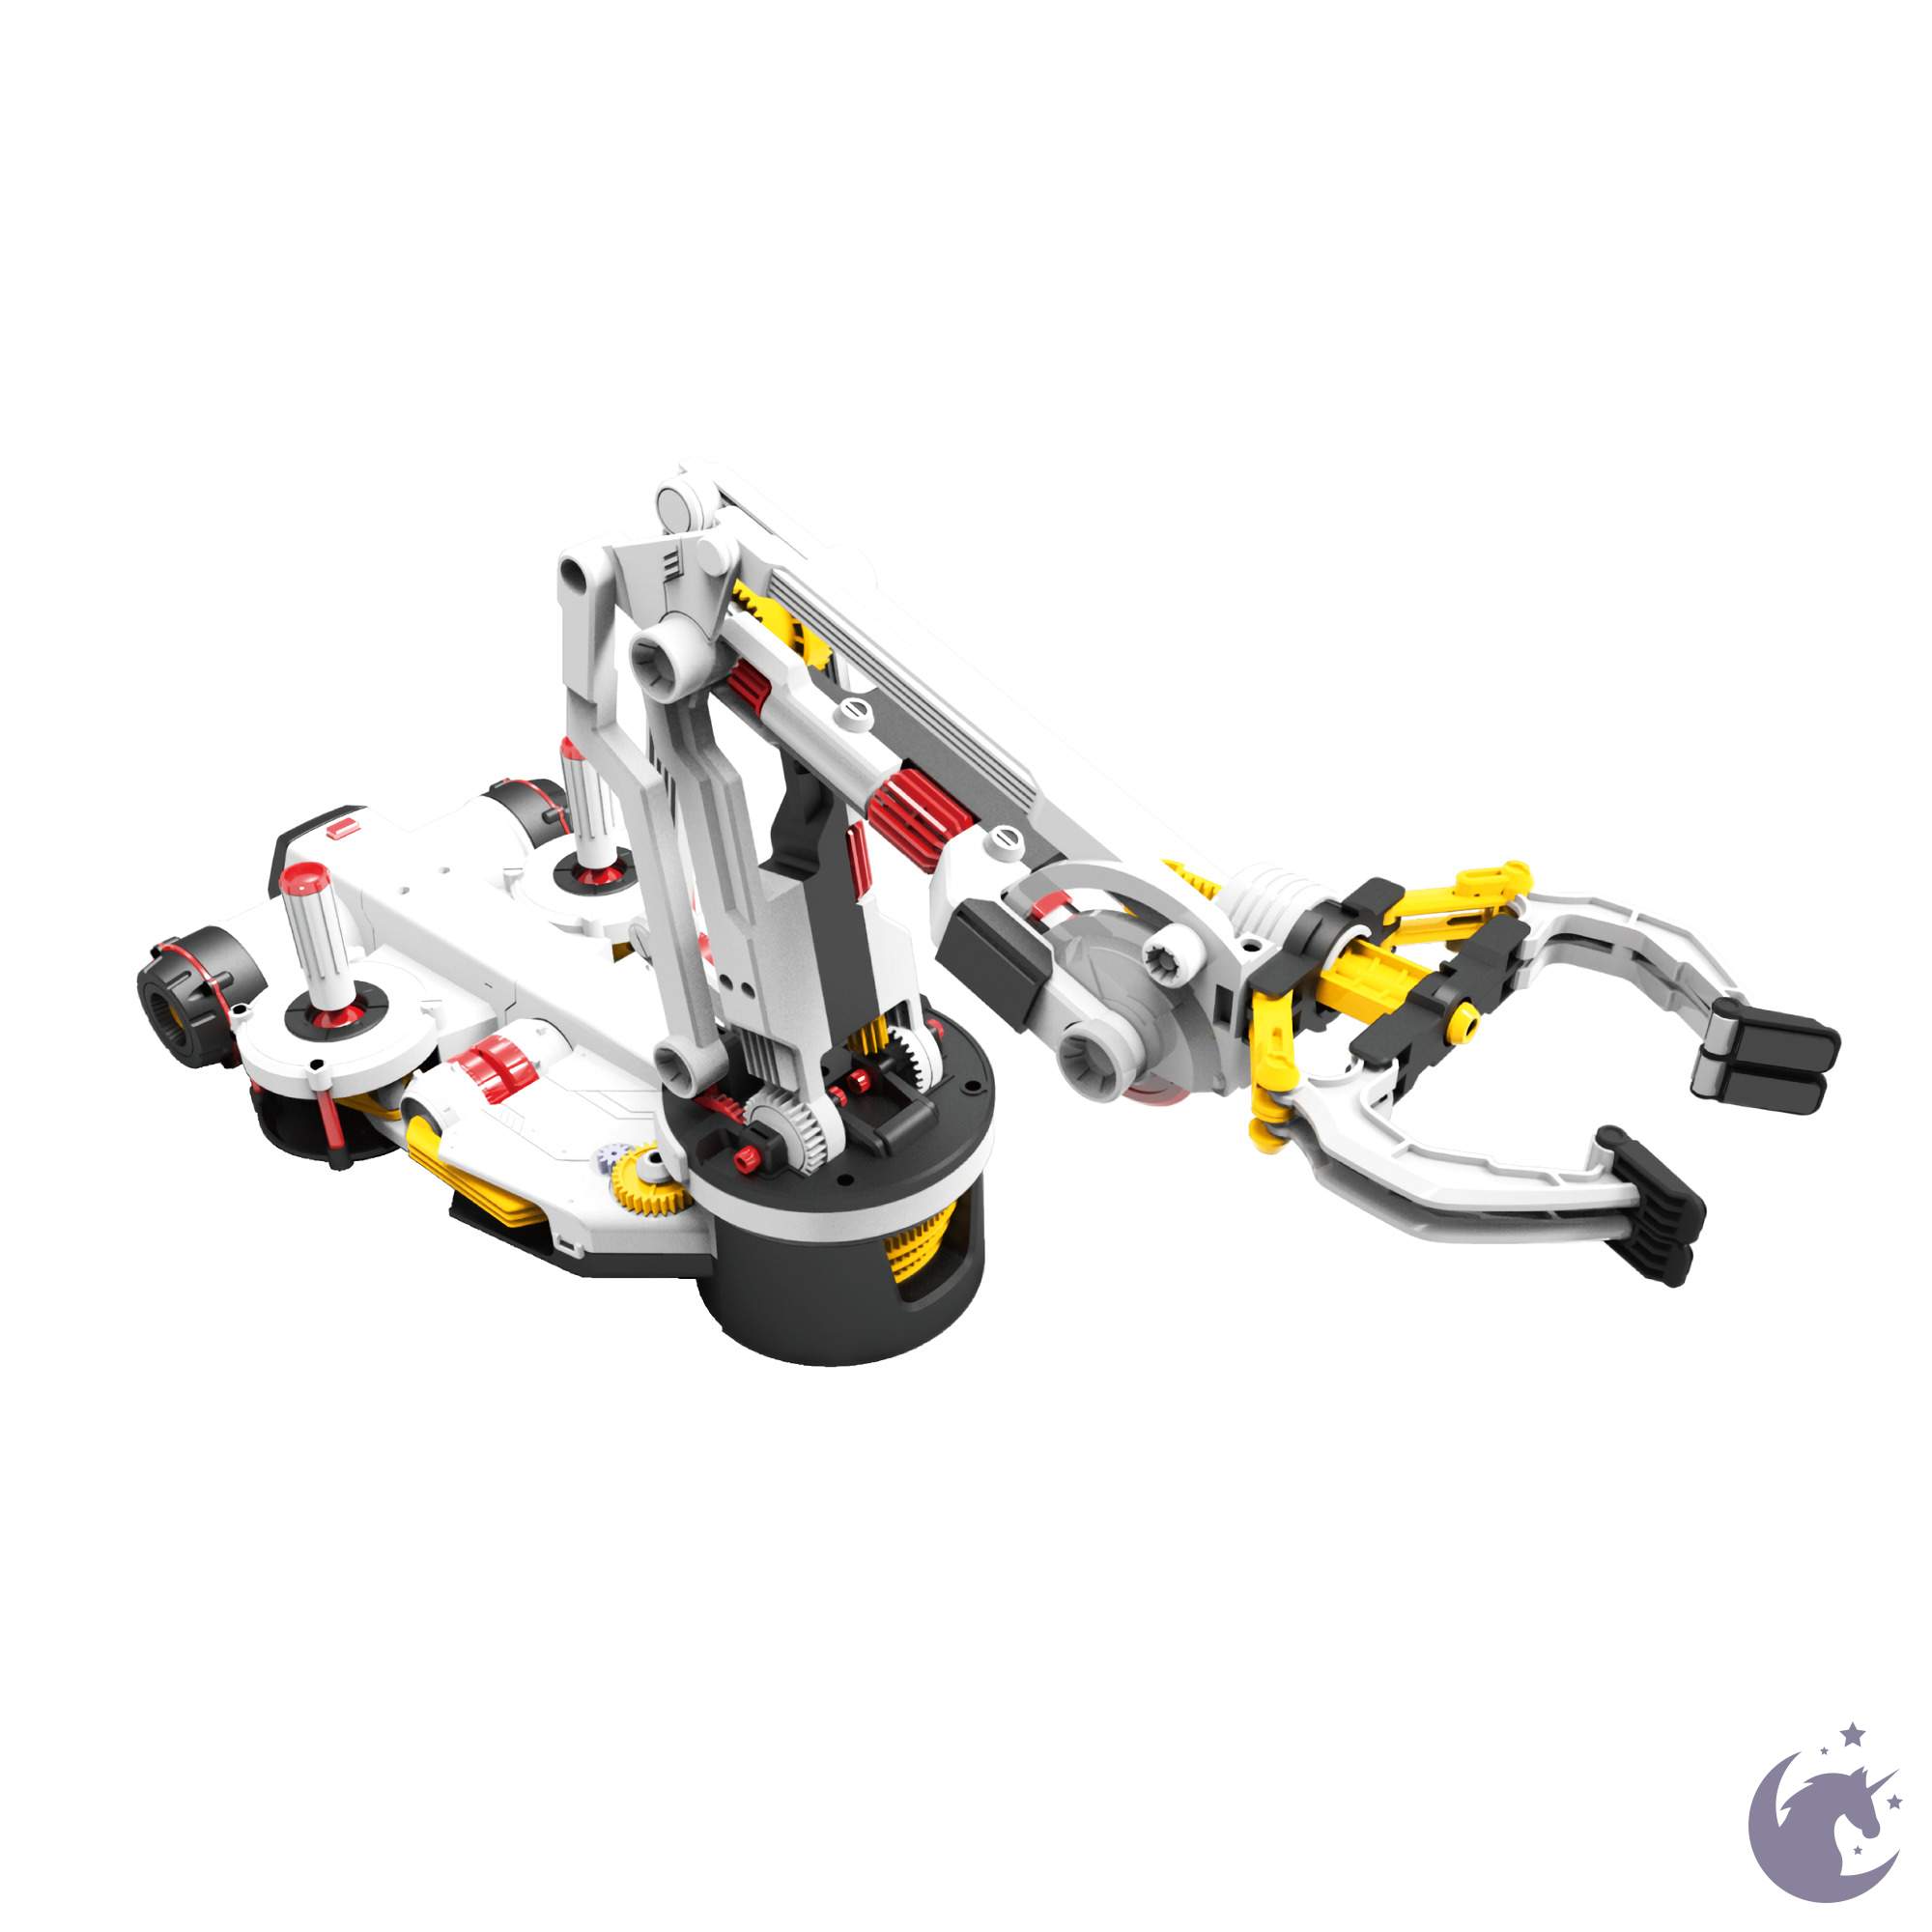 unicorntoys cic kits joystick robotic arm educational robot engineering stem toys for teens CIC21-537